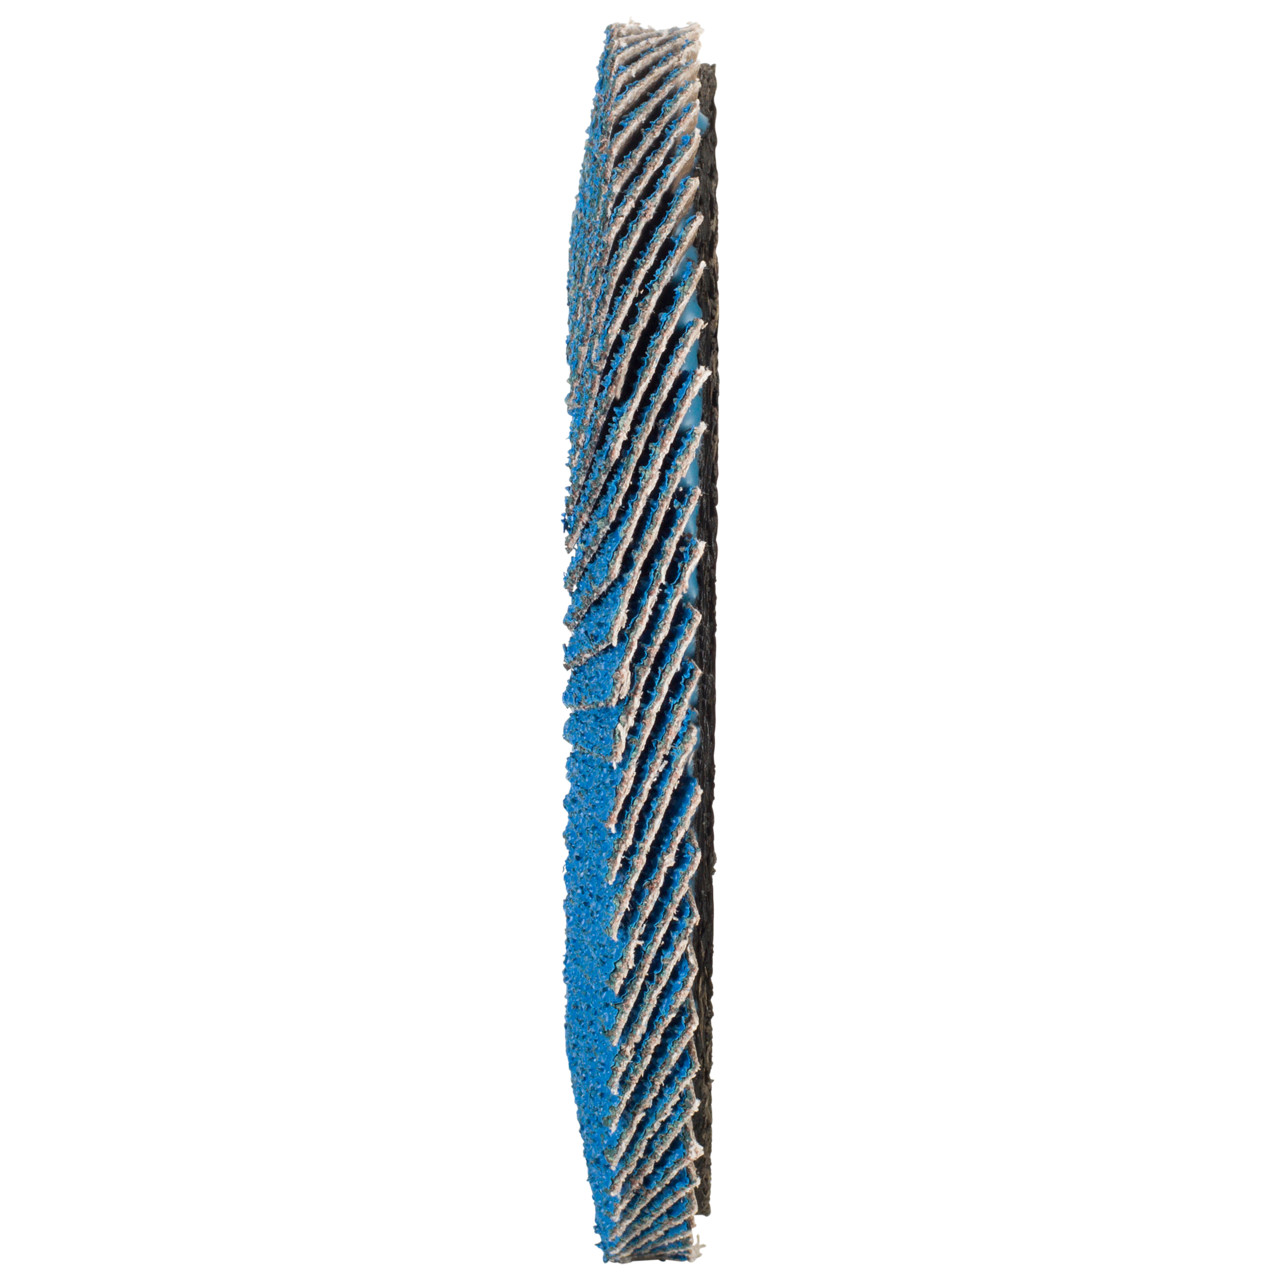 TYROLIT Fächerscheibe DxH 115x22,2 FASTCUT für Stahl & Edelstahl, P80, Form: 27A - gekröpfte Ausführung (Glasfaserträgerkörperausführung), Art. 160235